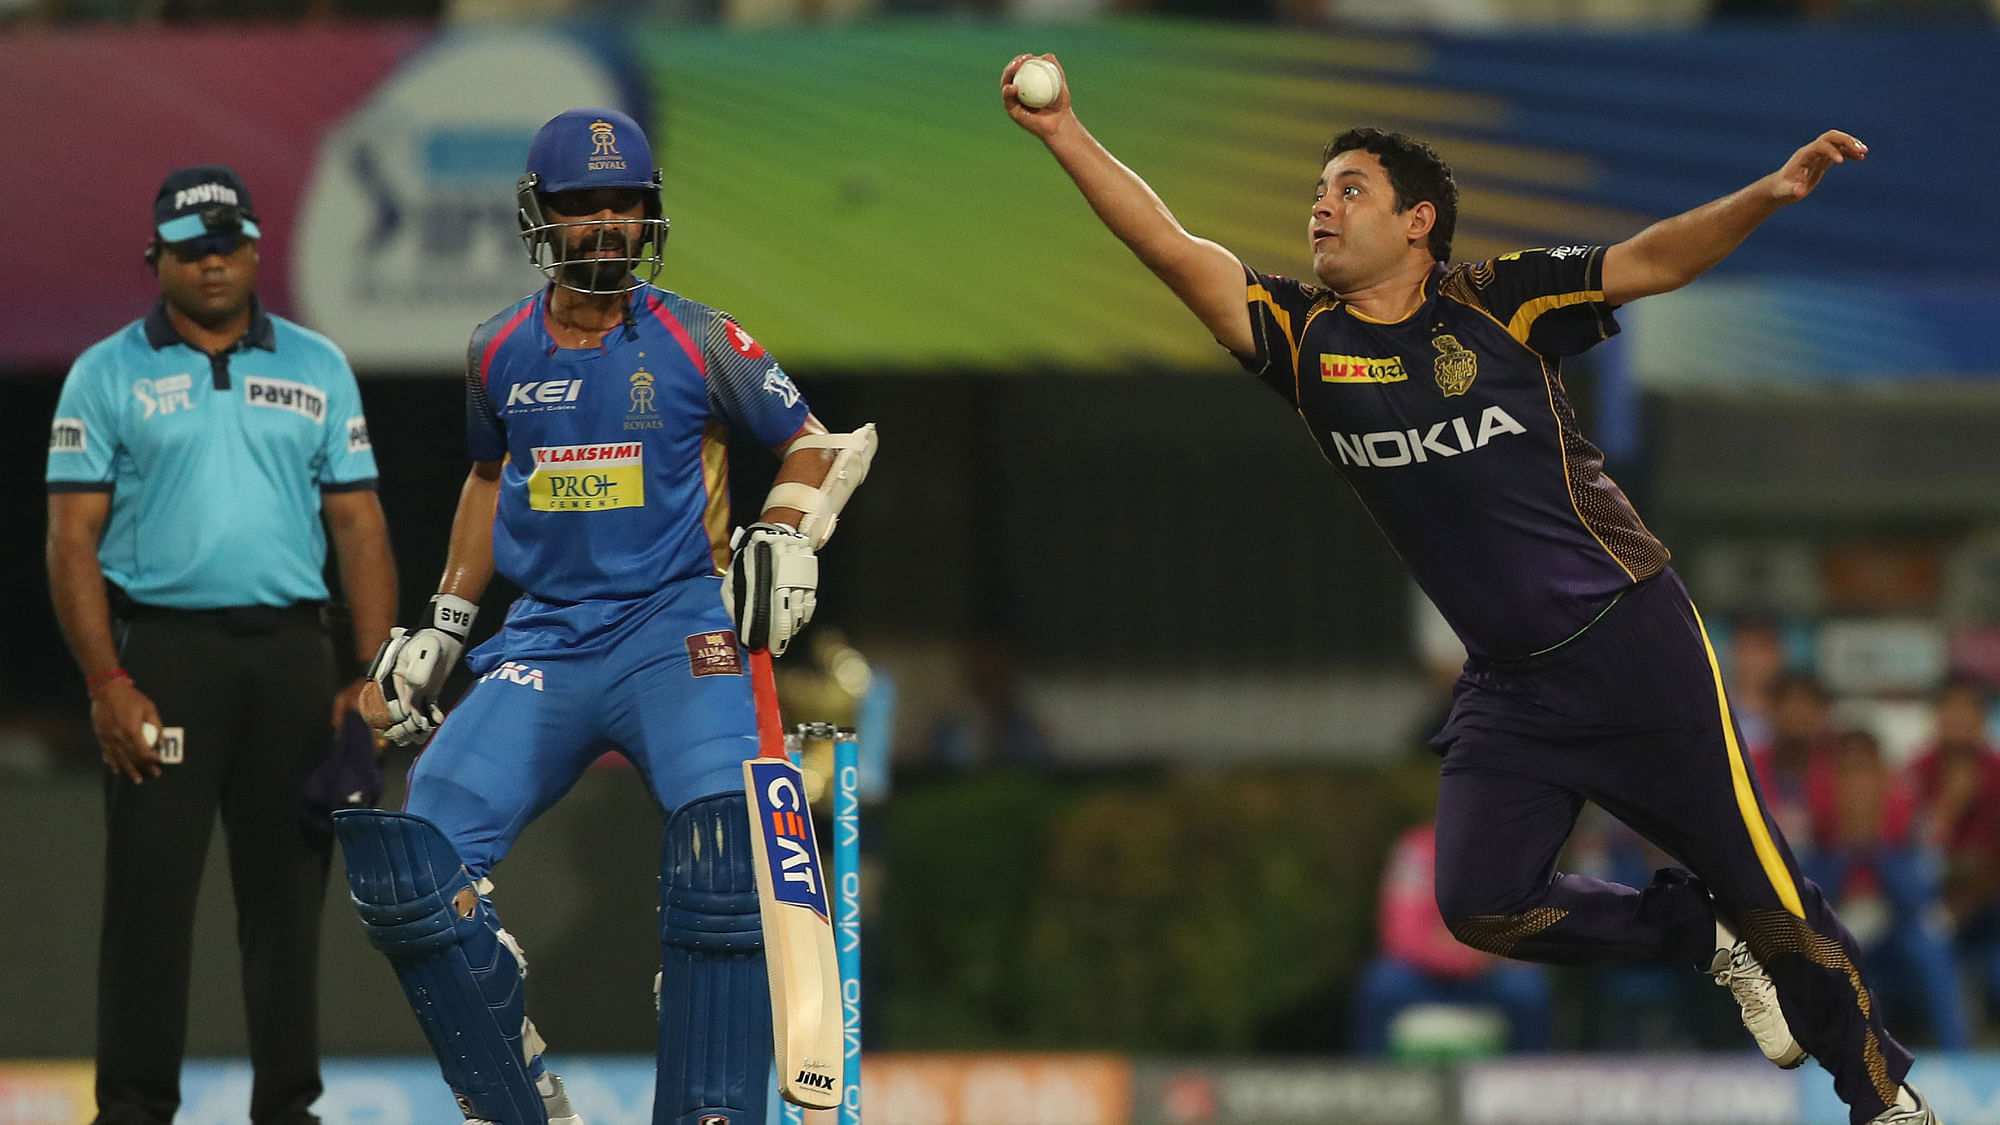 Piyush Chawla takes a catch to dismiss Rahul Tripathi off his own bowling.